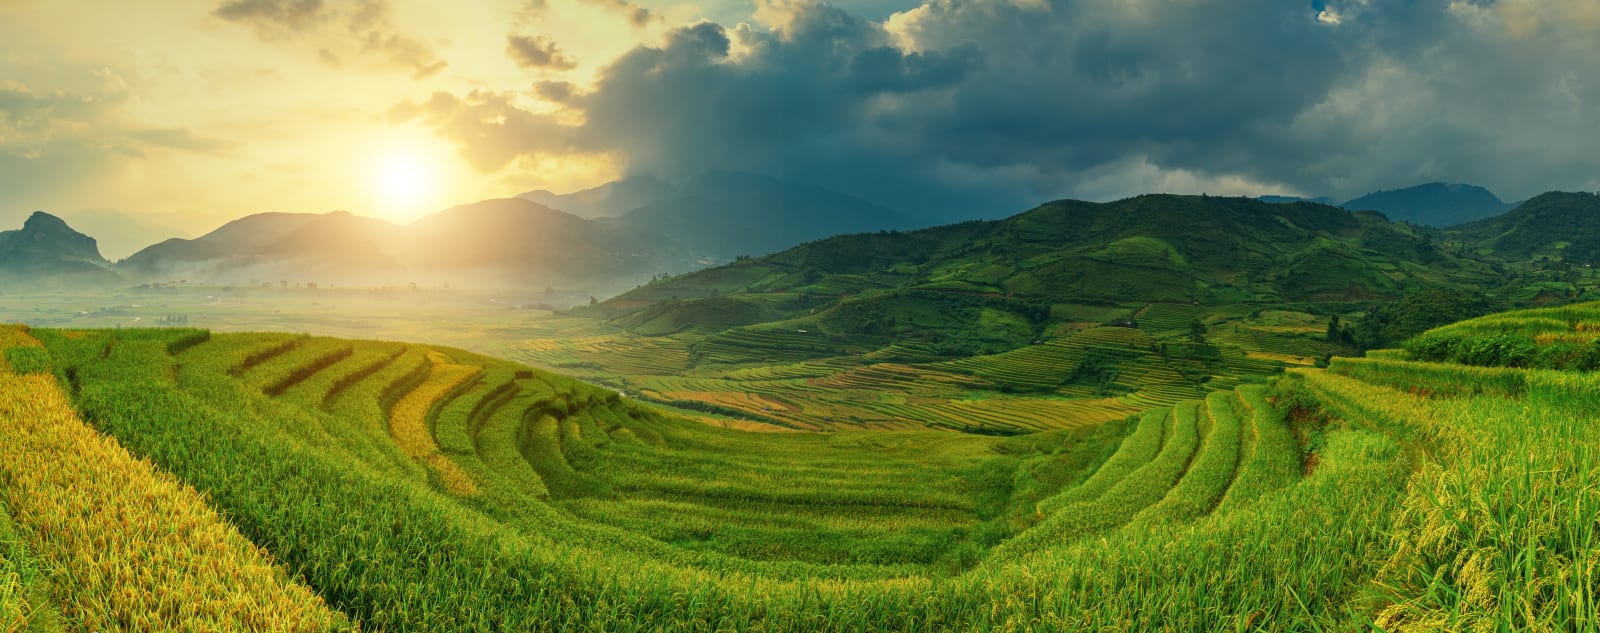 Rice field in Vietnam.